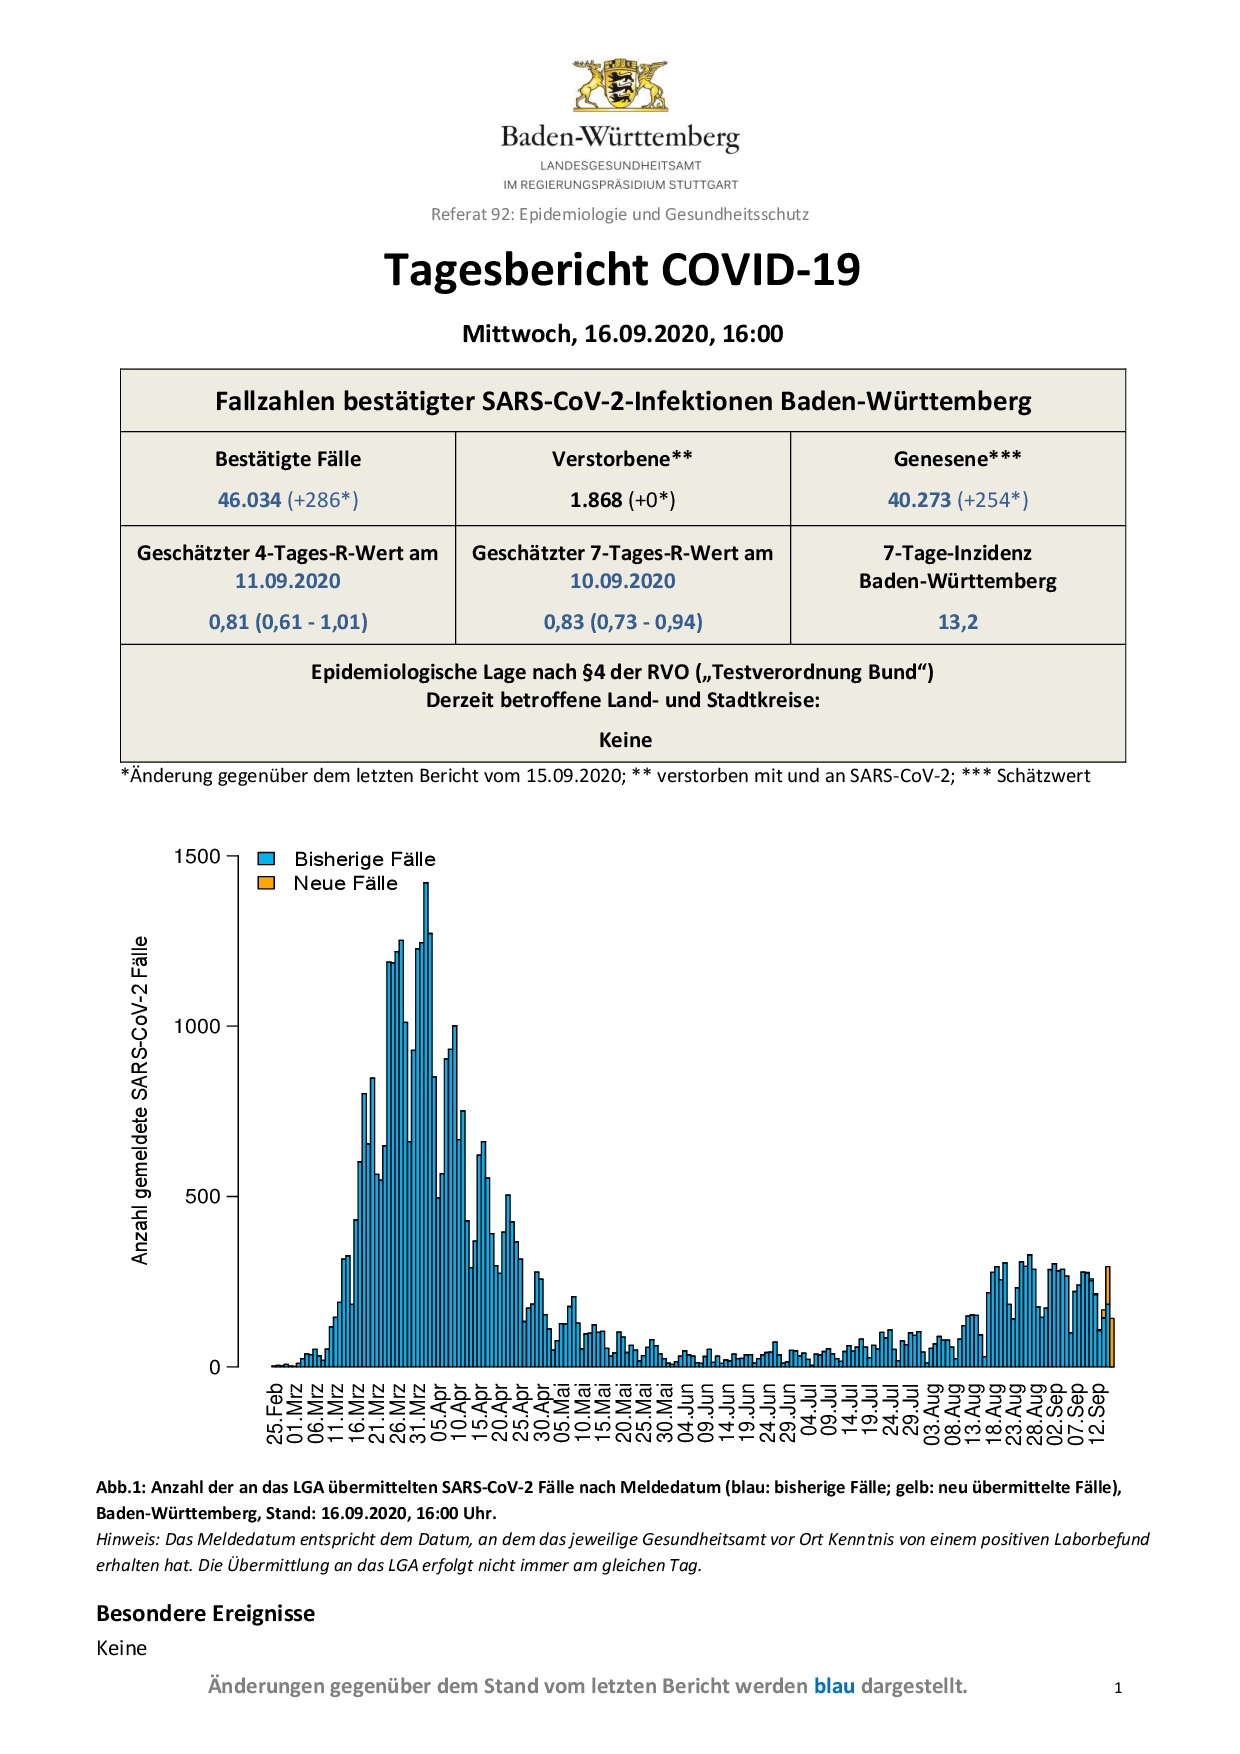 COVID-19 Tagesbericht (16.09.2020) des Landesgesundheitsamts Baden-Württemberg